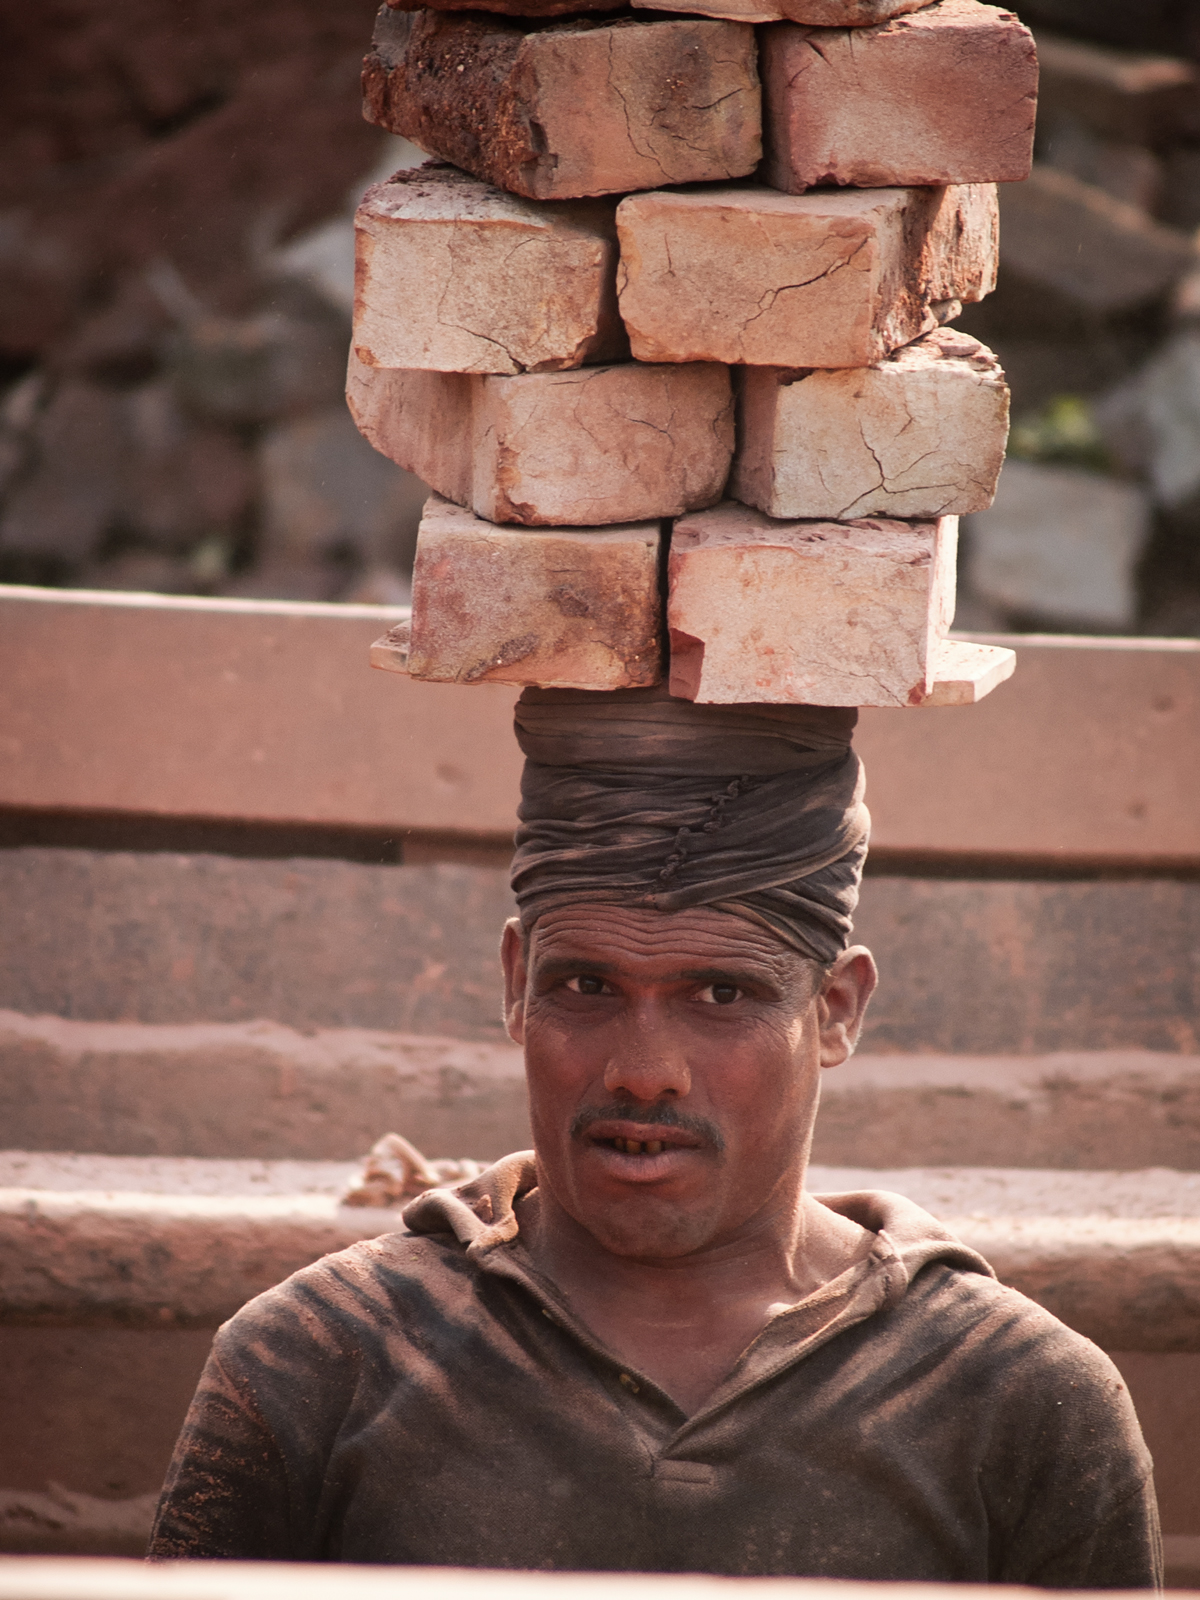 Brick carrier a Bangladesh man carrying bricks on his head